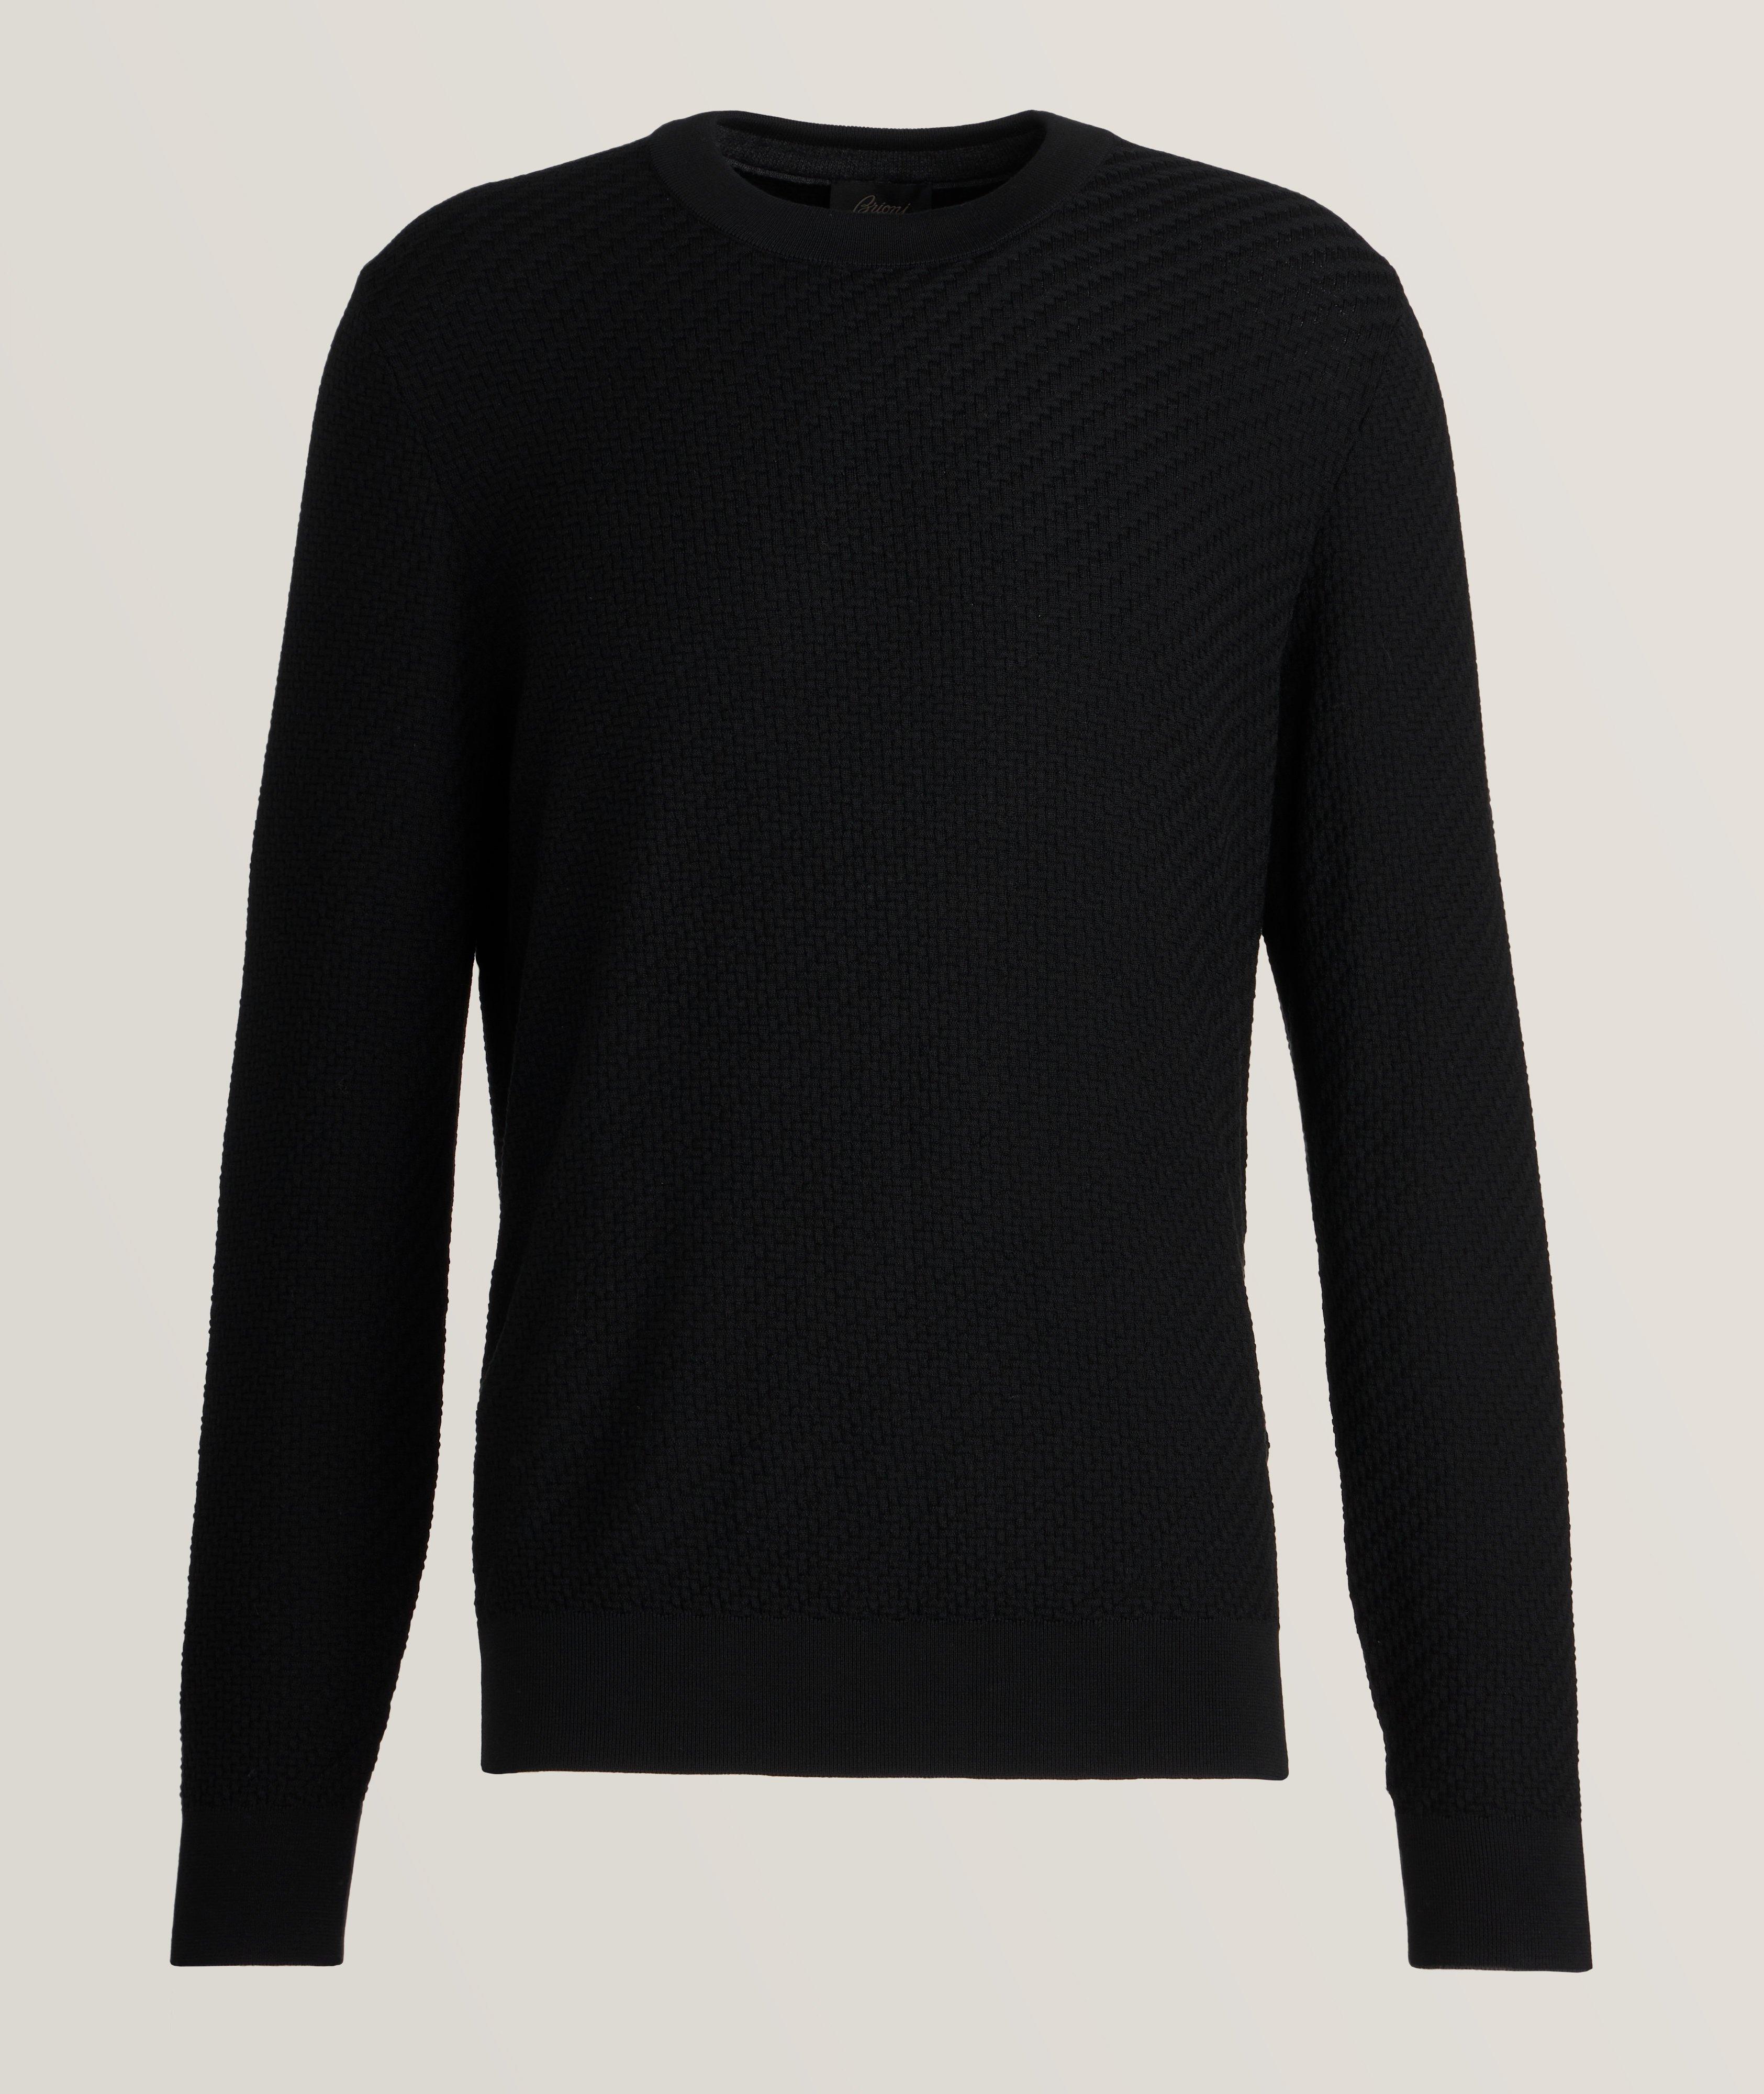 Chevron Stitch Certified Wool & Cashmere Sweater image 0